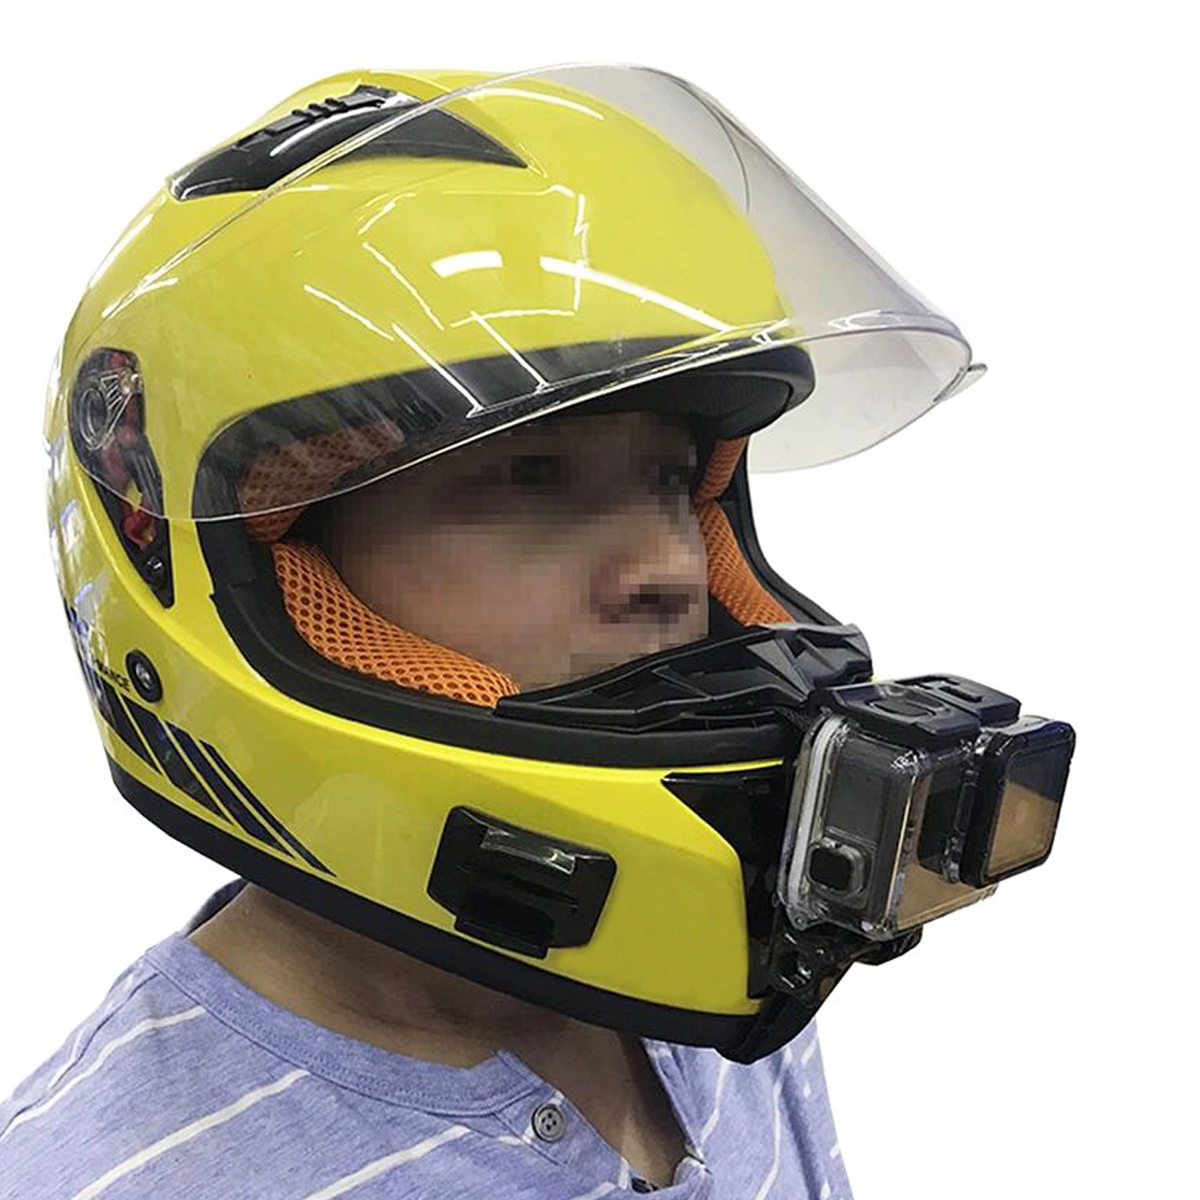 

Motorcycle Full Face Helmet Chin Mount for All GoPro Hero SJCAM Action Camera